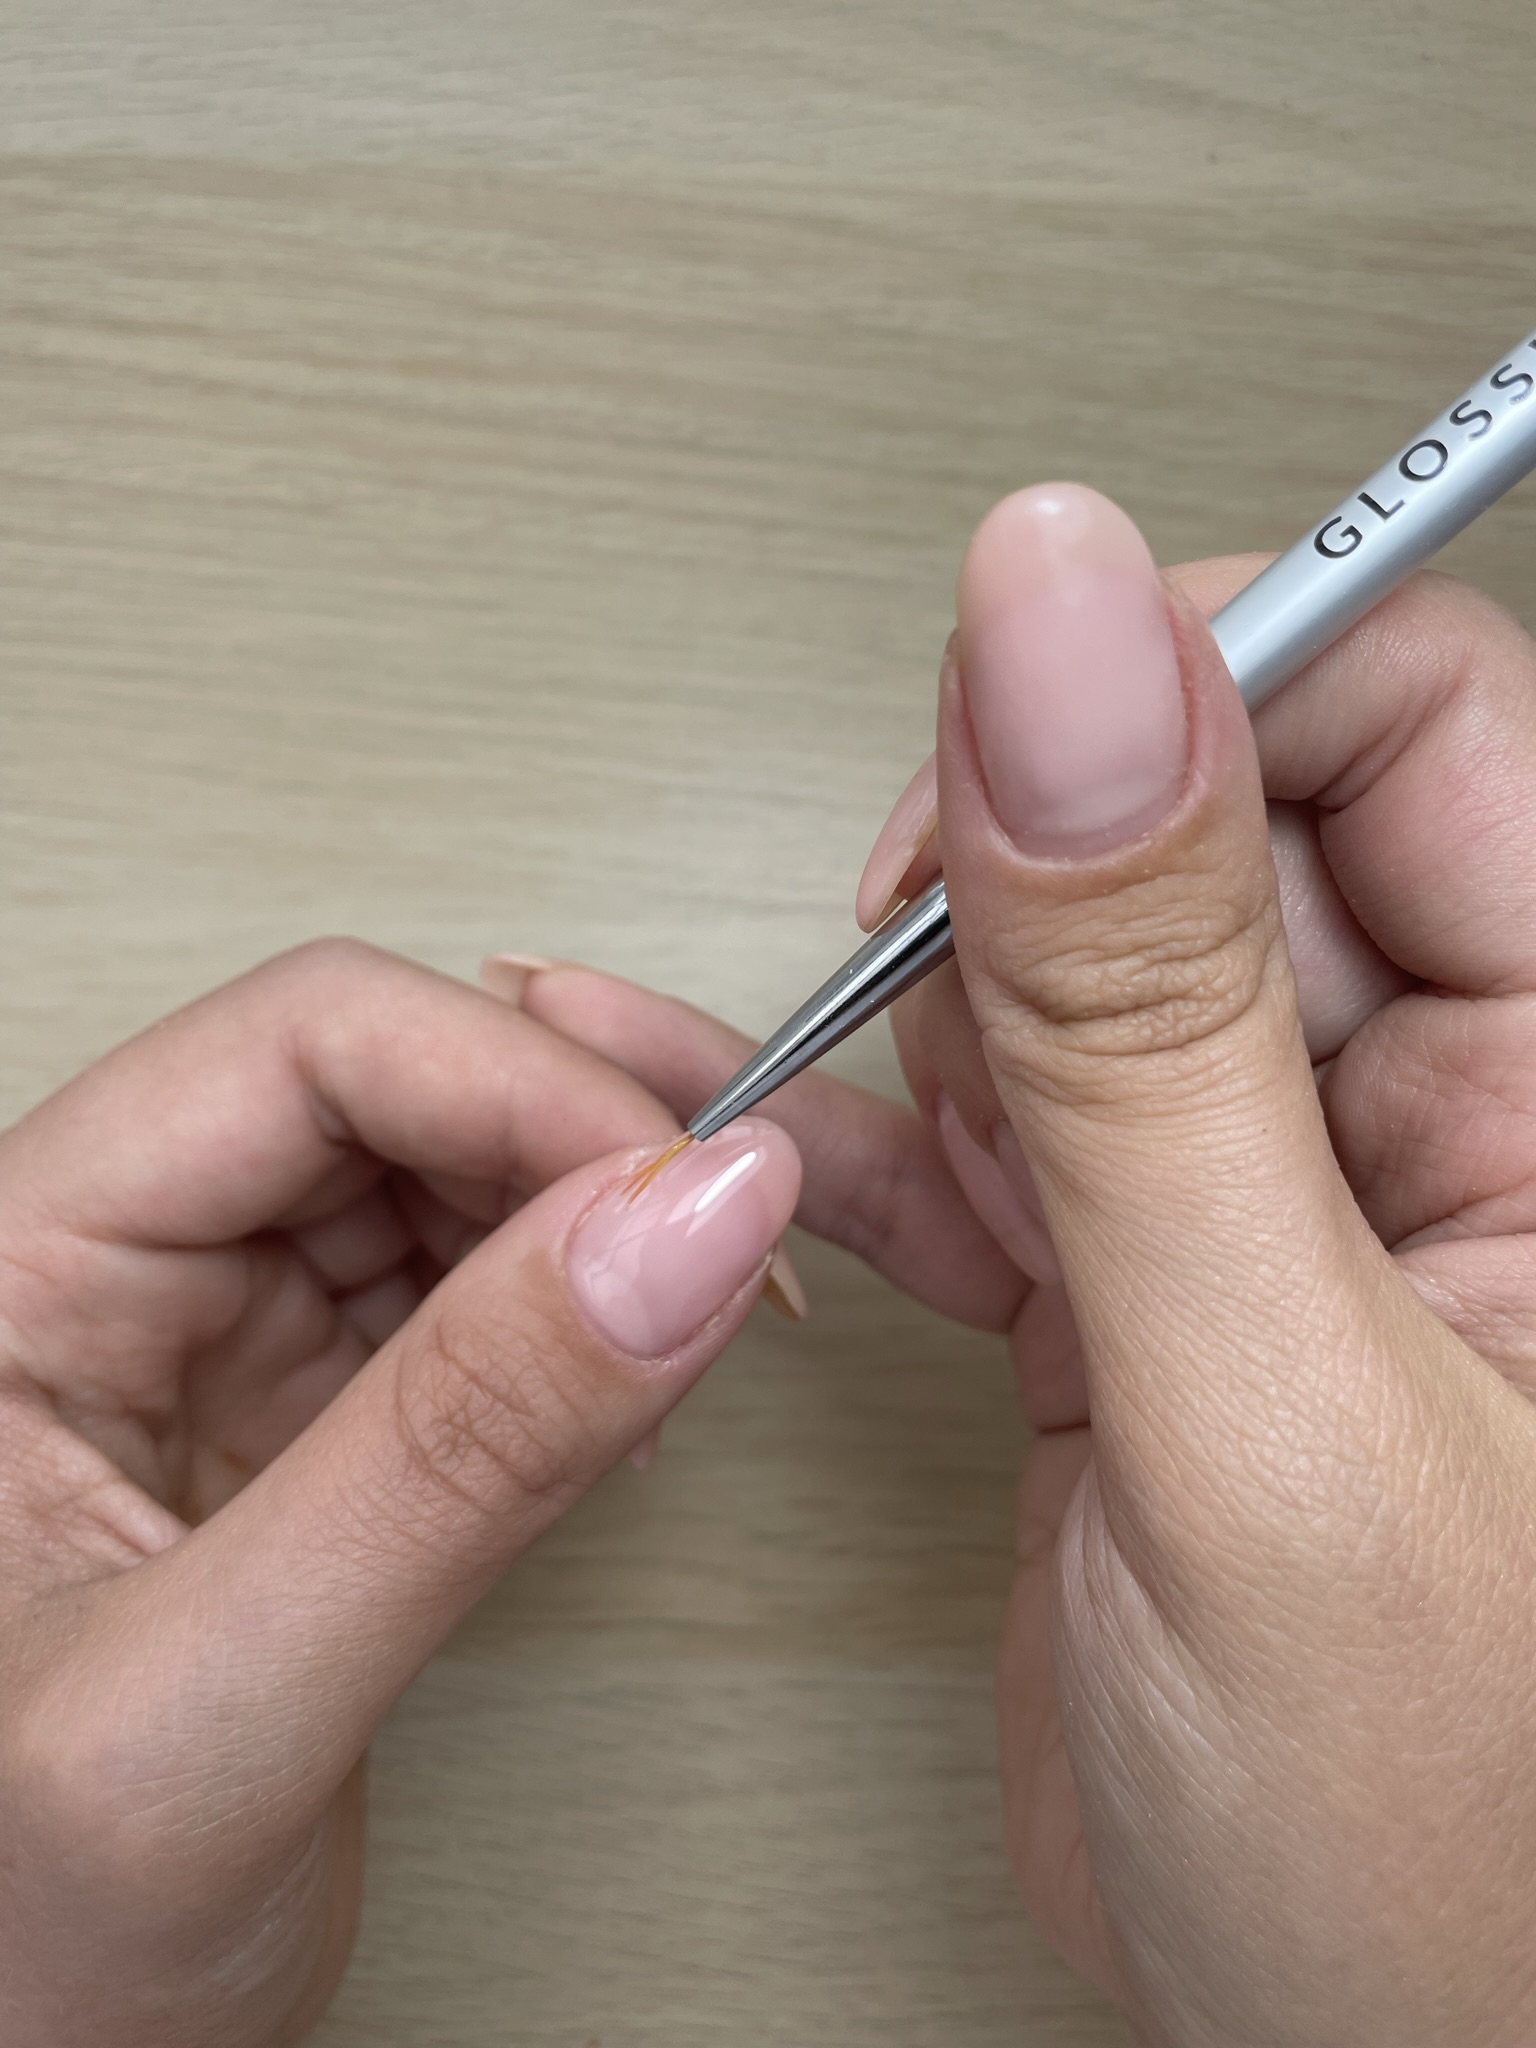 woman uses nail tool to create an apex on thumb nail